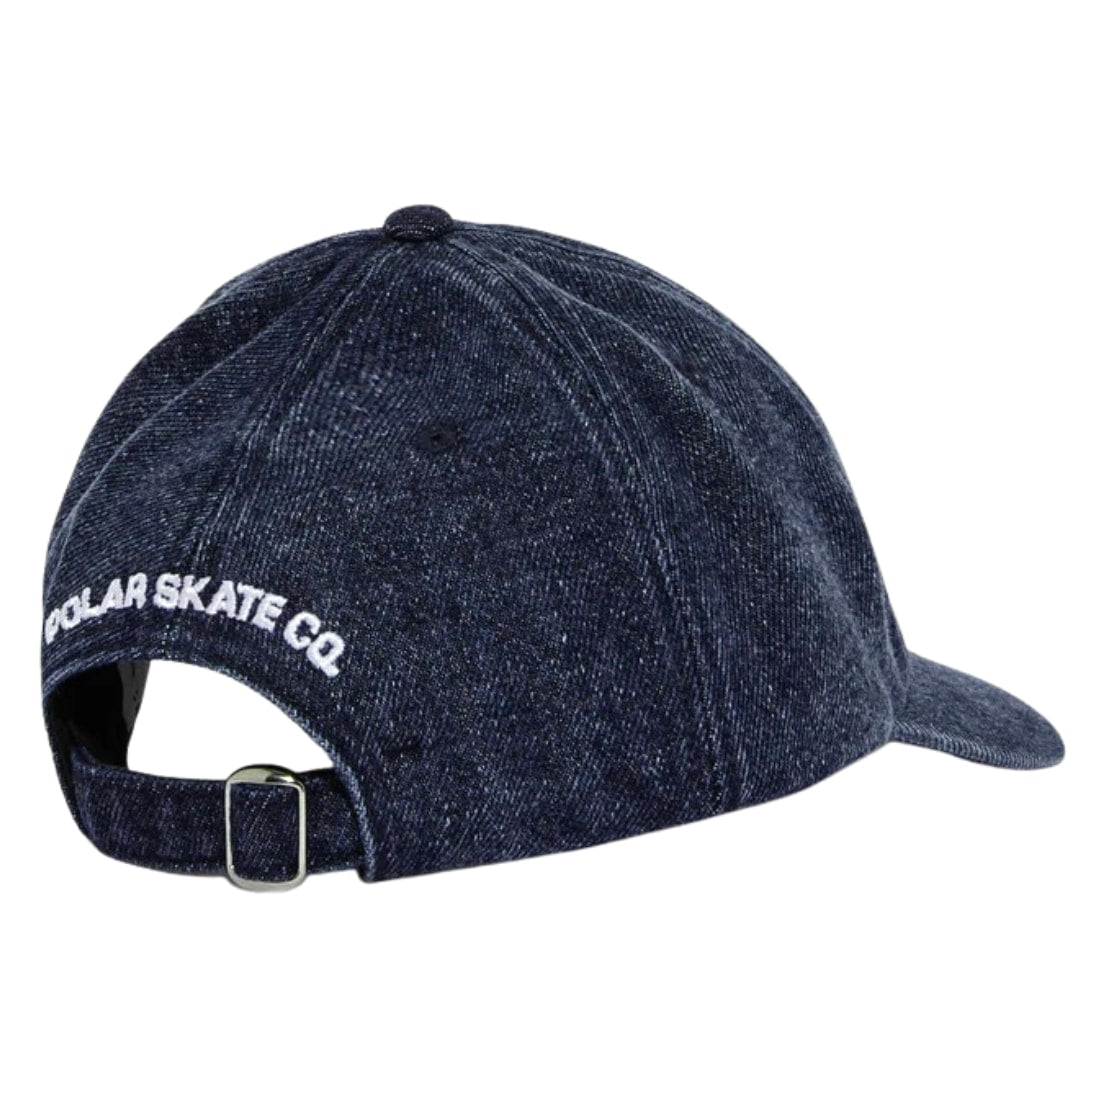 Polar Denim Cap - Dark Blue - Strapback Cap by Polar One Size